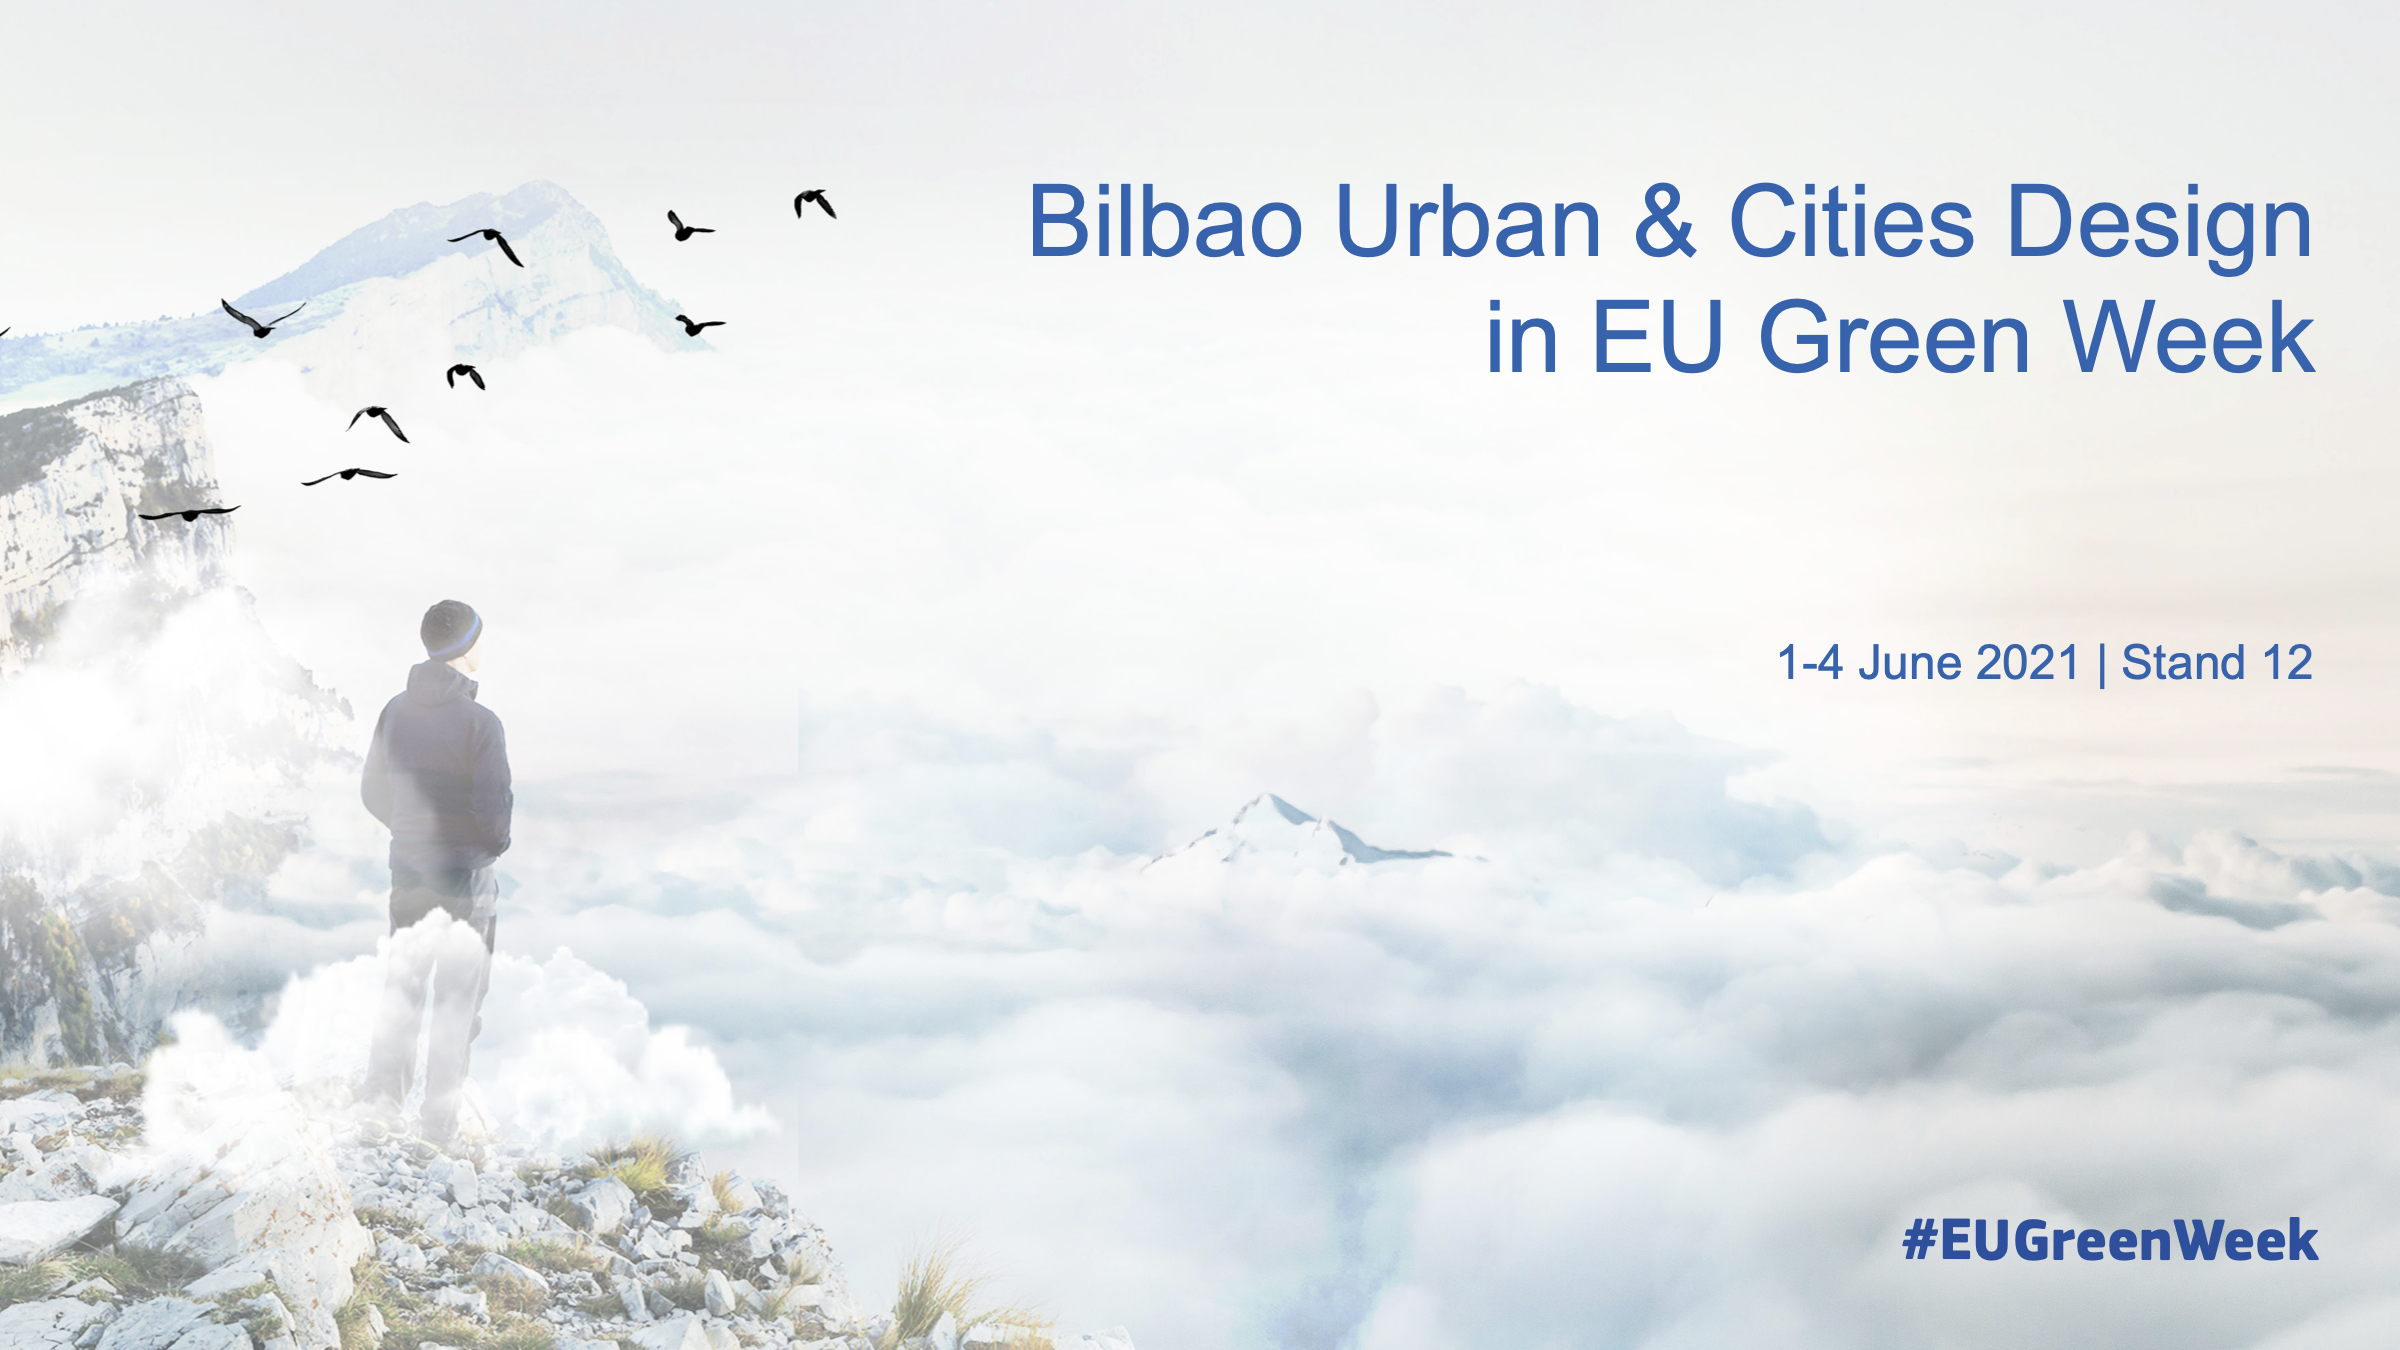 BILBAO URBAN & CITIES DESIGN PARTICIPANTE DE LA EU GREEN WEEK